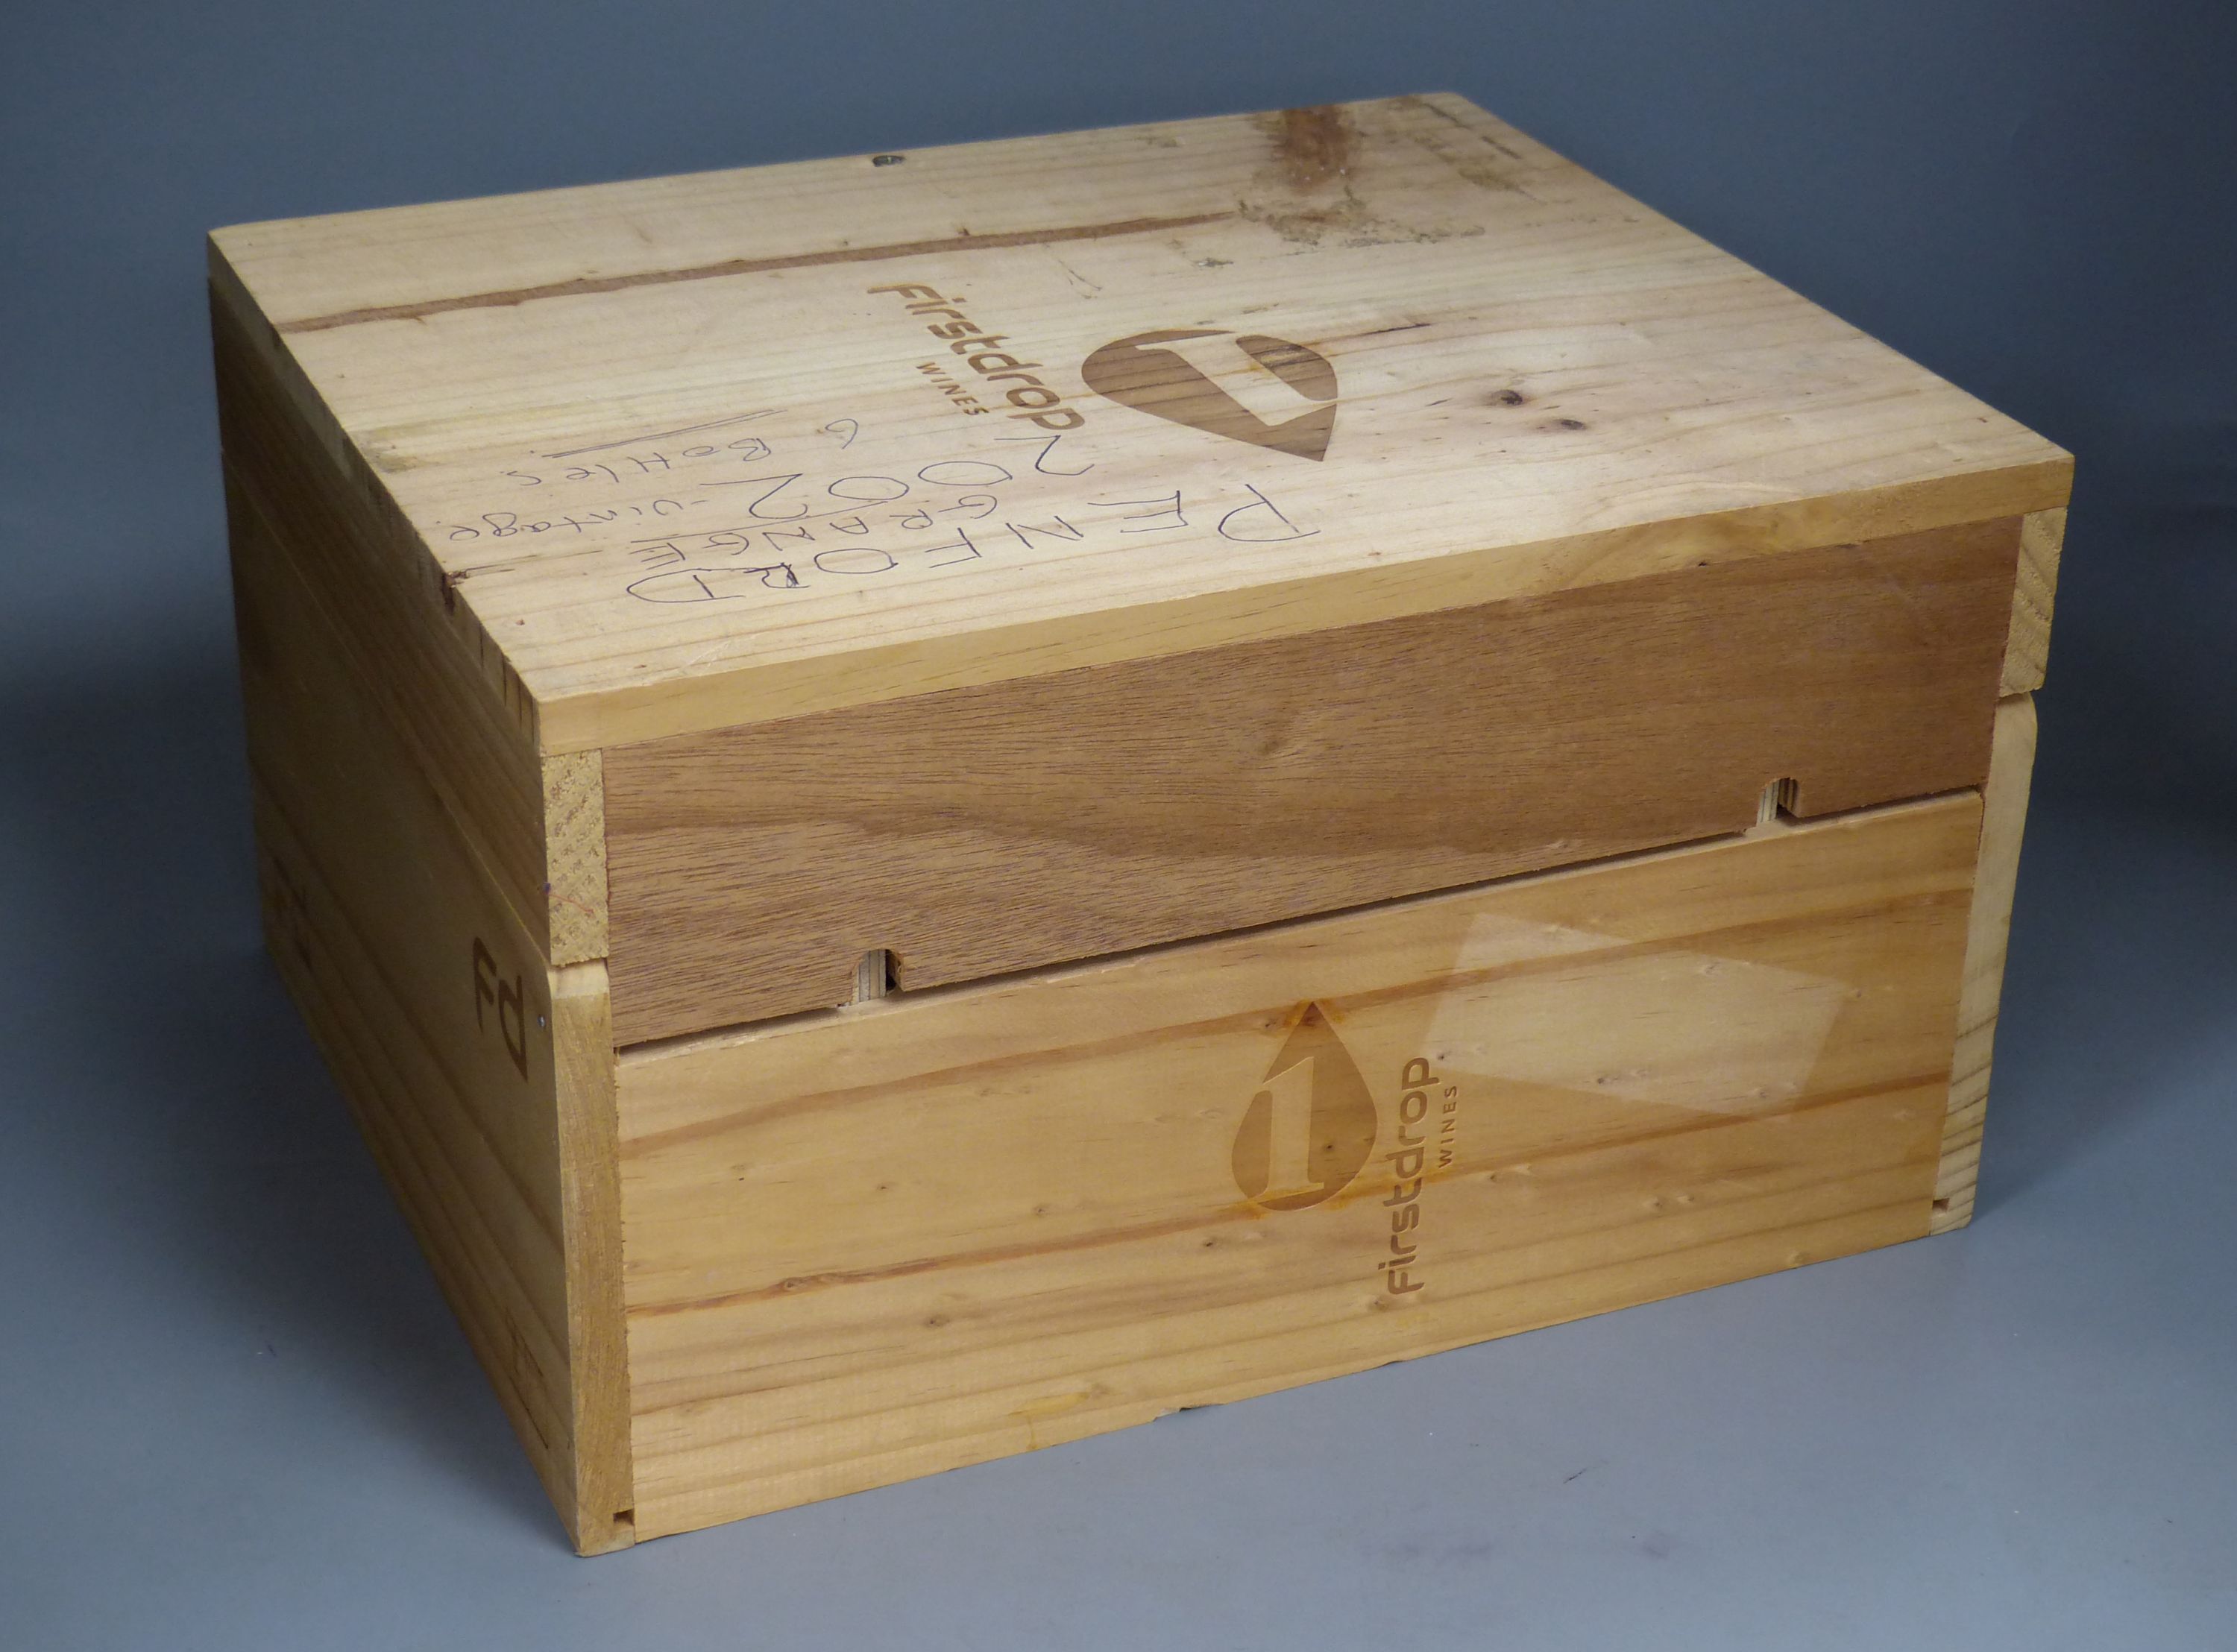 A case of six Penfolds Grange 2002, in wooden box.